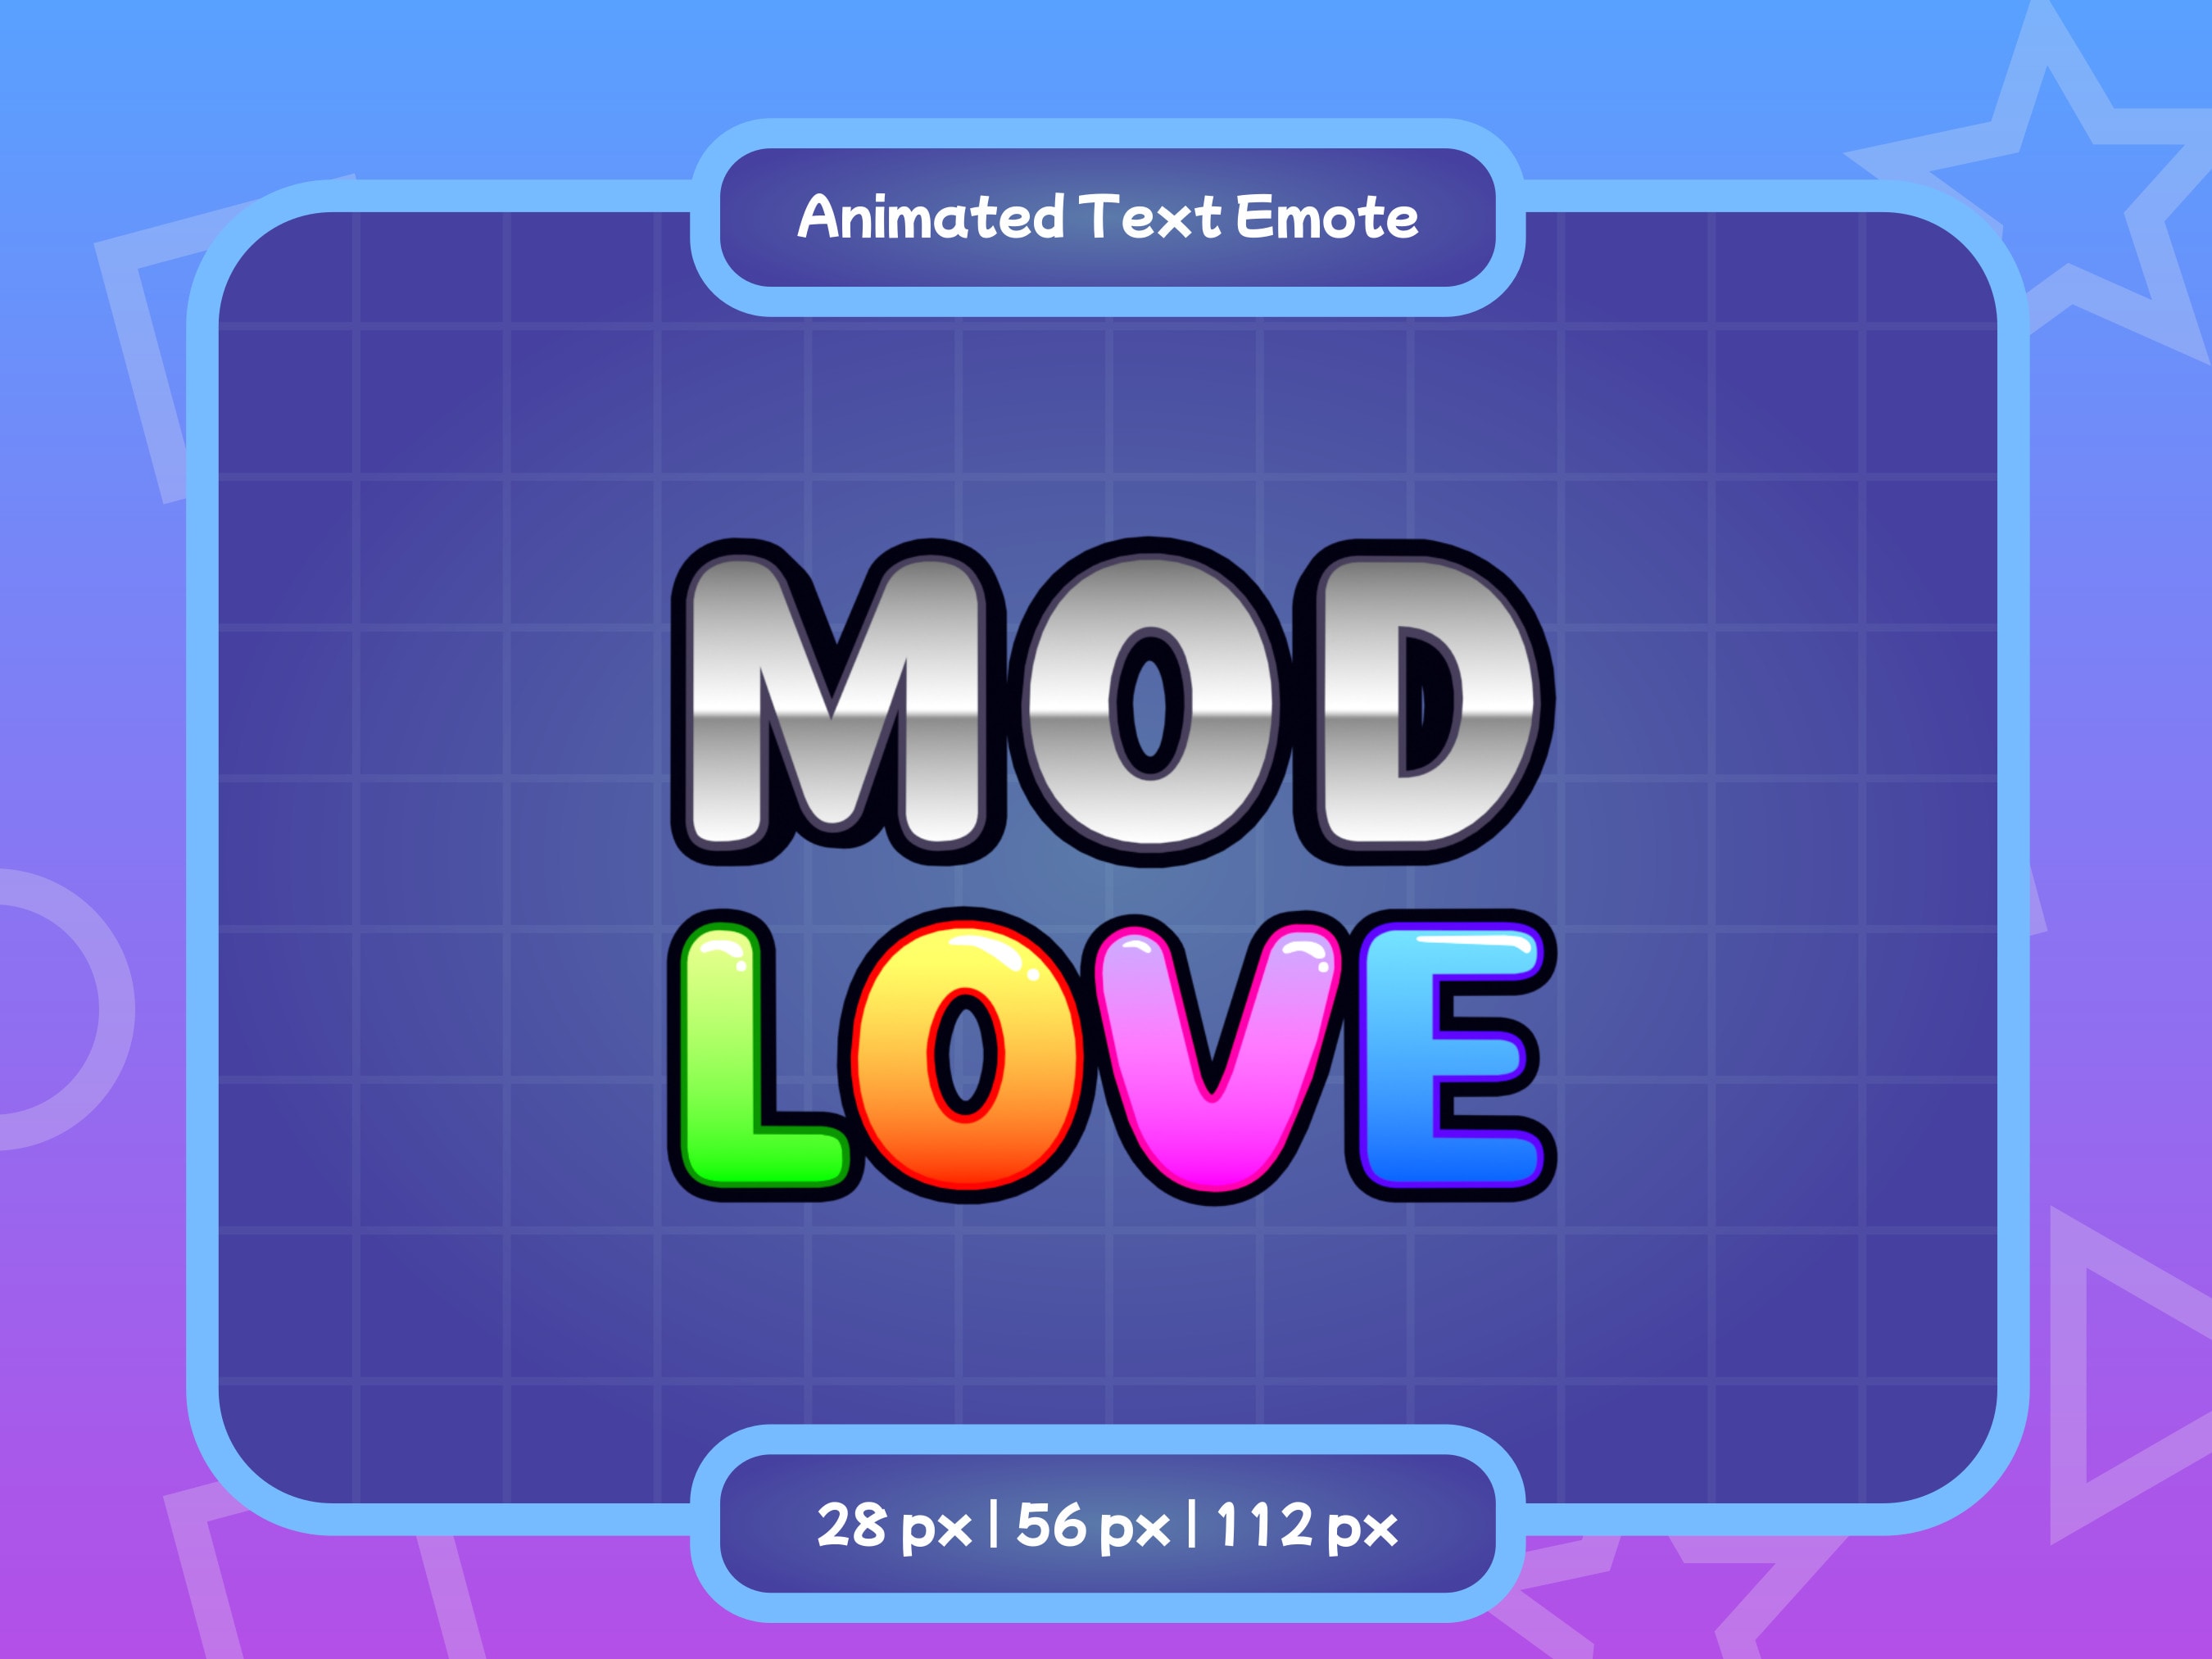 Bubble Mod Love Twitch Emote Mod Love Text Discord Emote 